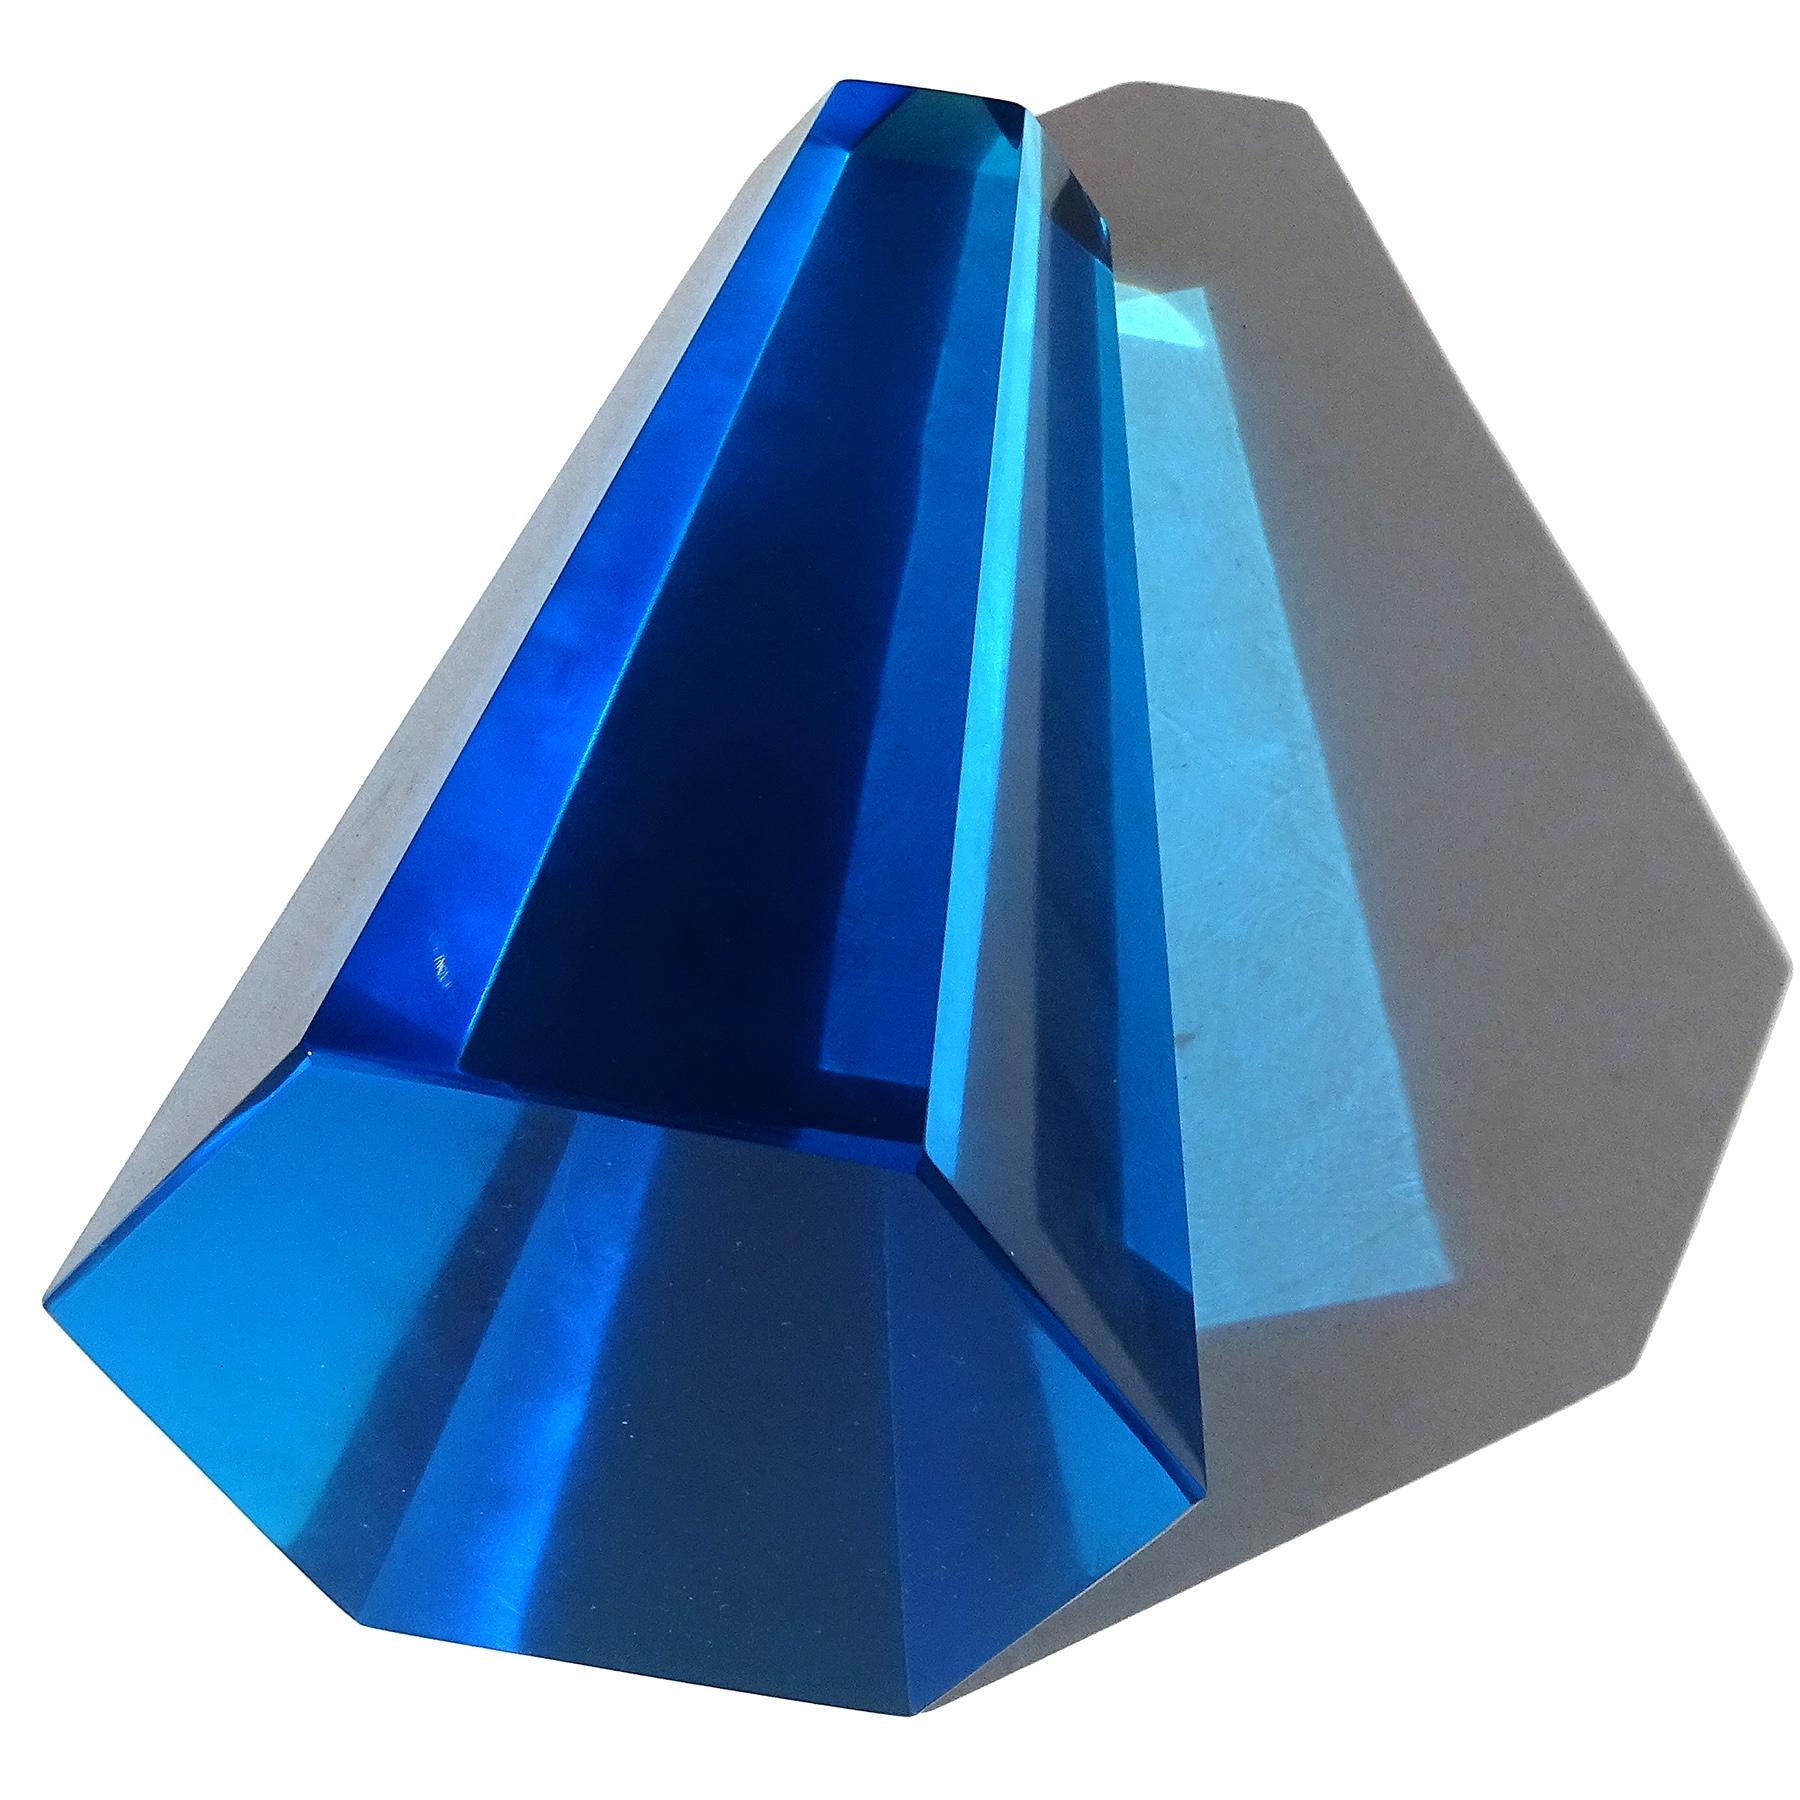 Murano Vintage Blue Italian Art Glass Obelisk Pyramid Paperweight Sculpture 1